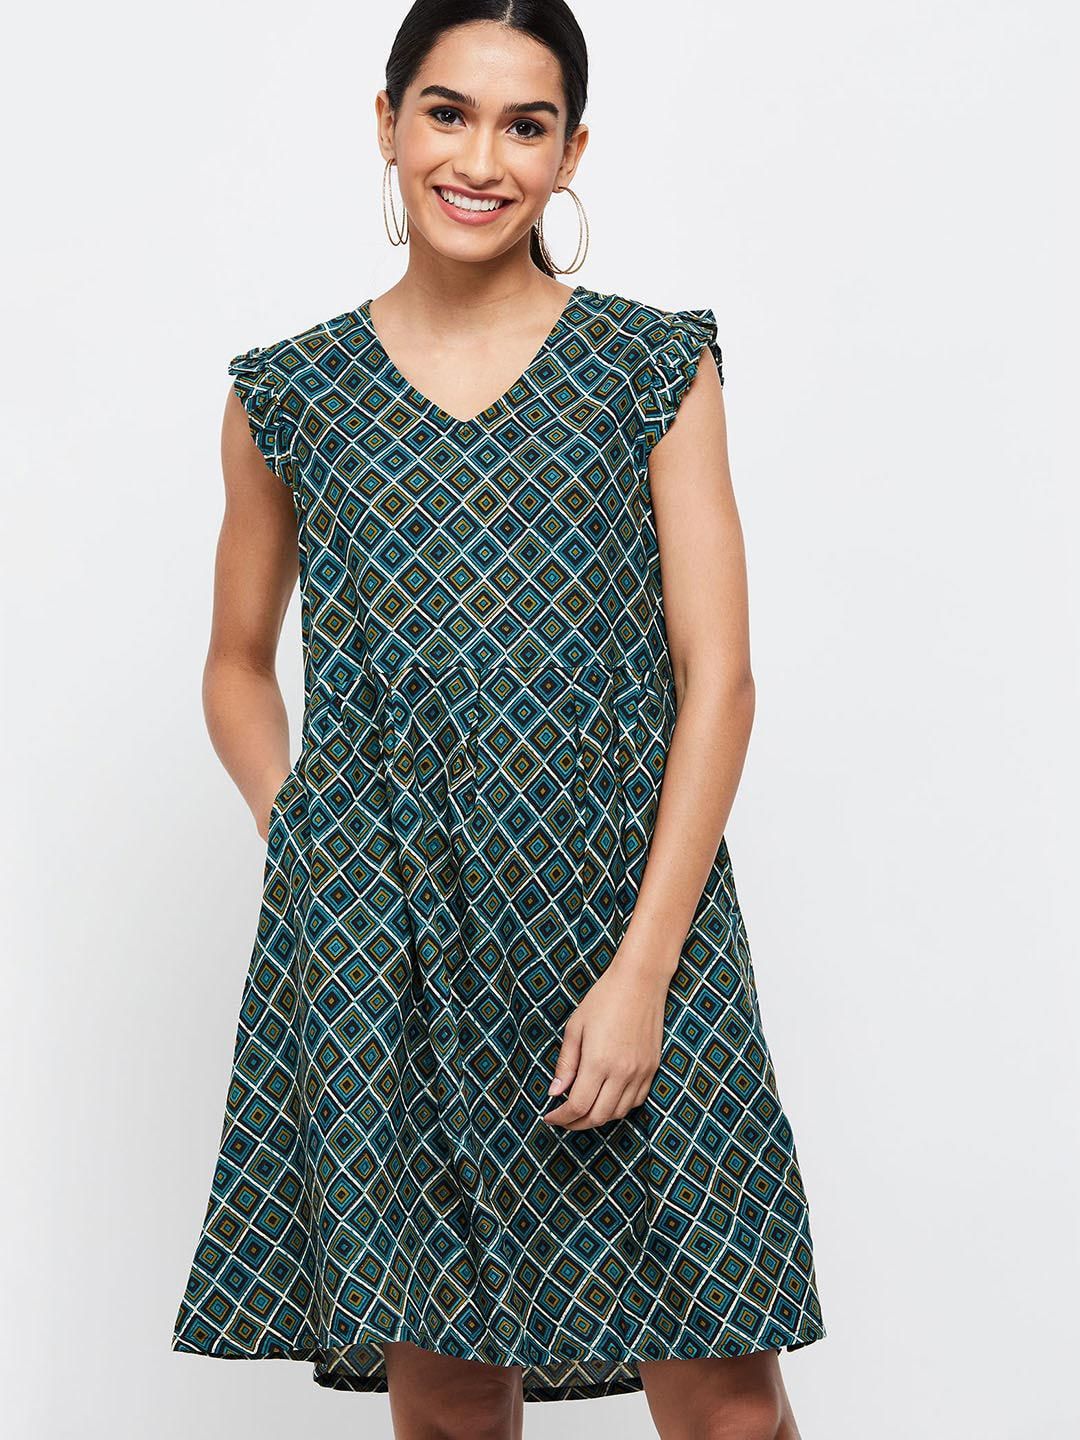 max Green Geometric Printed A-Line Dress Price in India